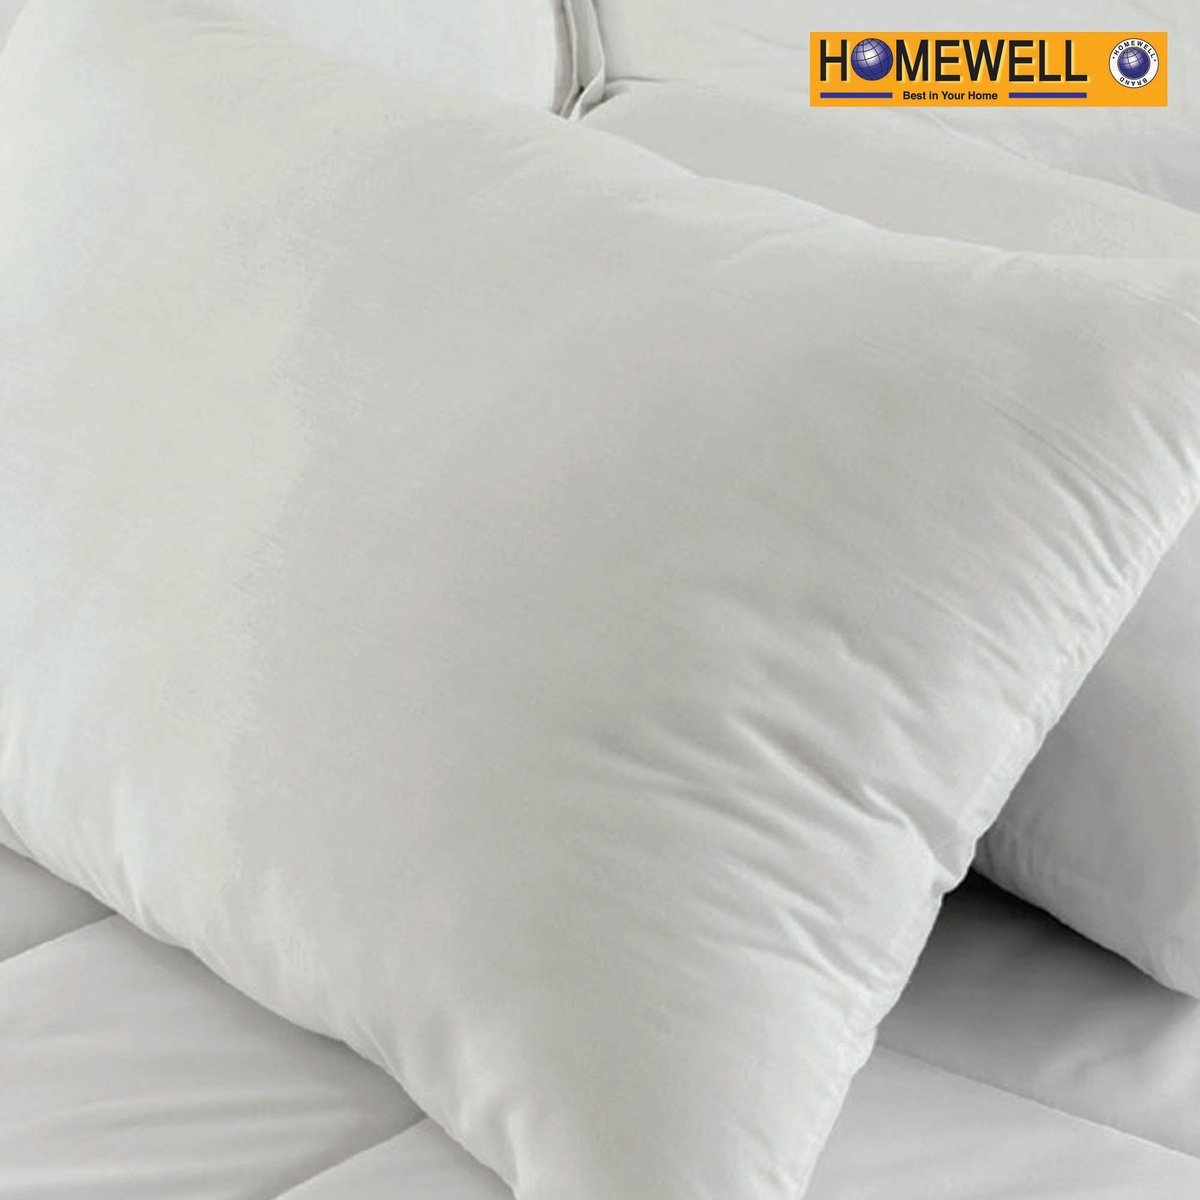 Homewell Pillow Pressed 50x70cm 900grm